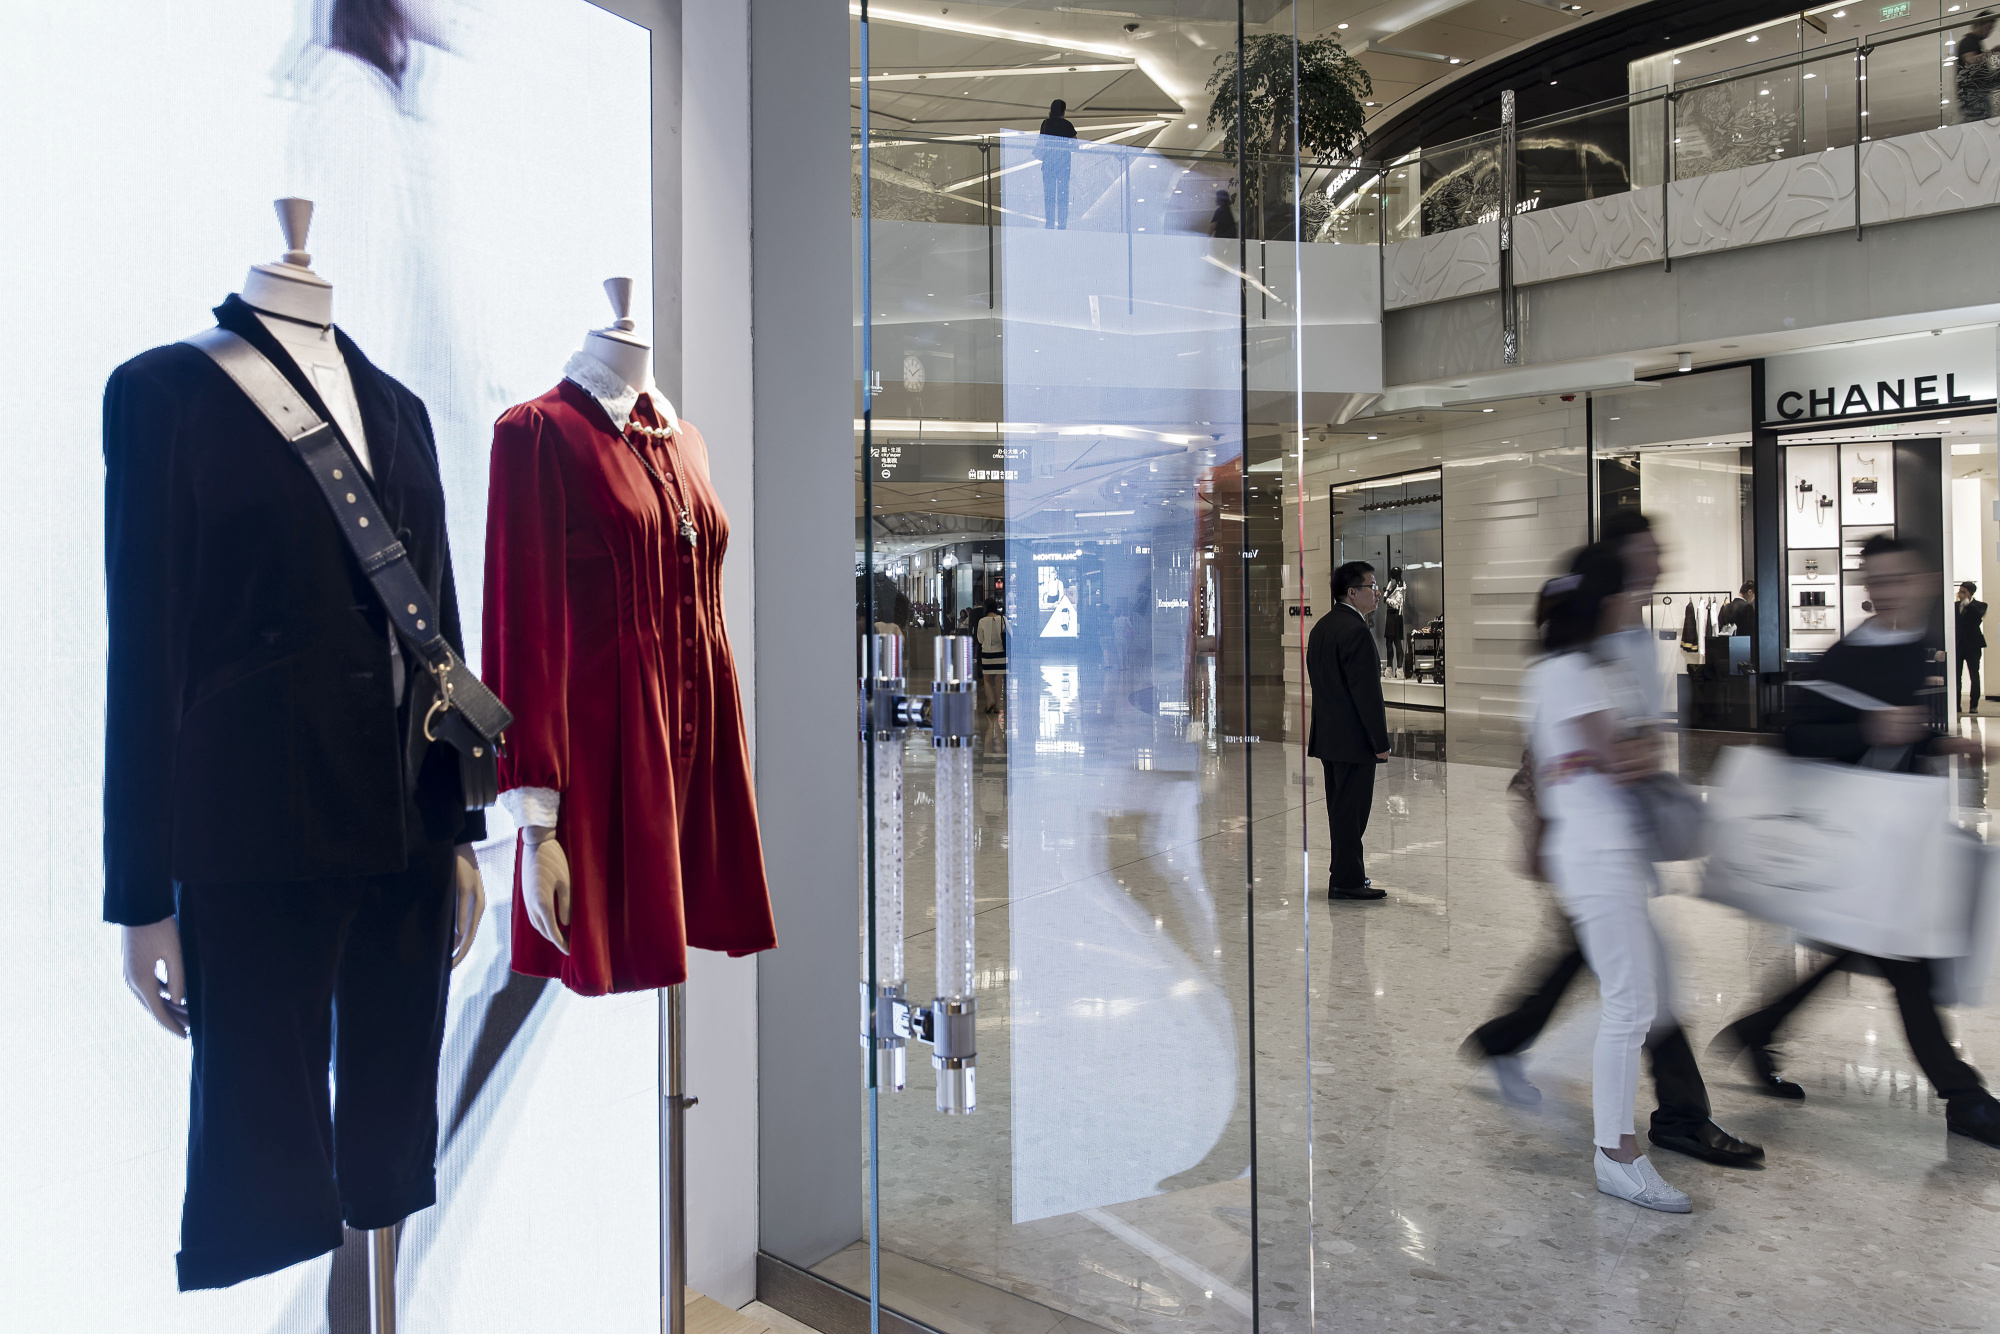 Neiman Marcus Has Its Luxury Strategy Backward - The Washington Post